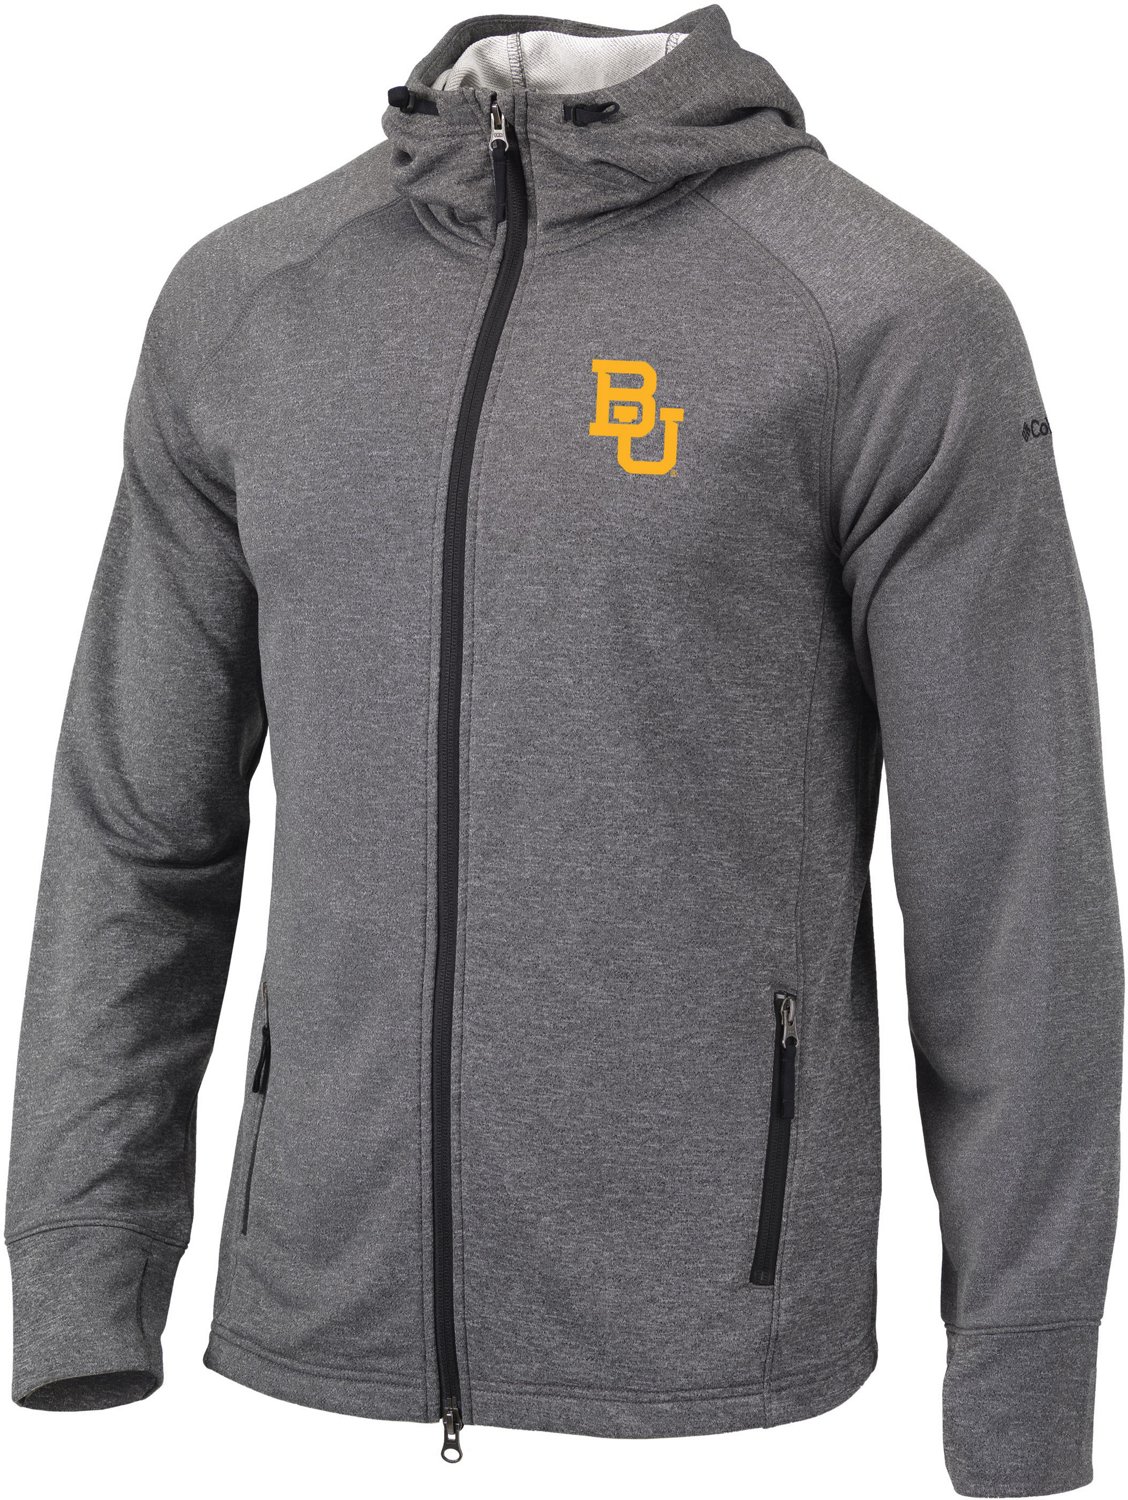 Columbia Sportswear Men's Baylor University Ace Full-Zip Jacket | Academy